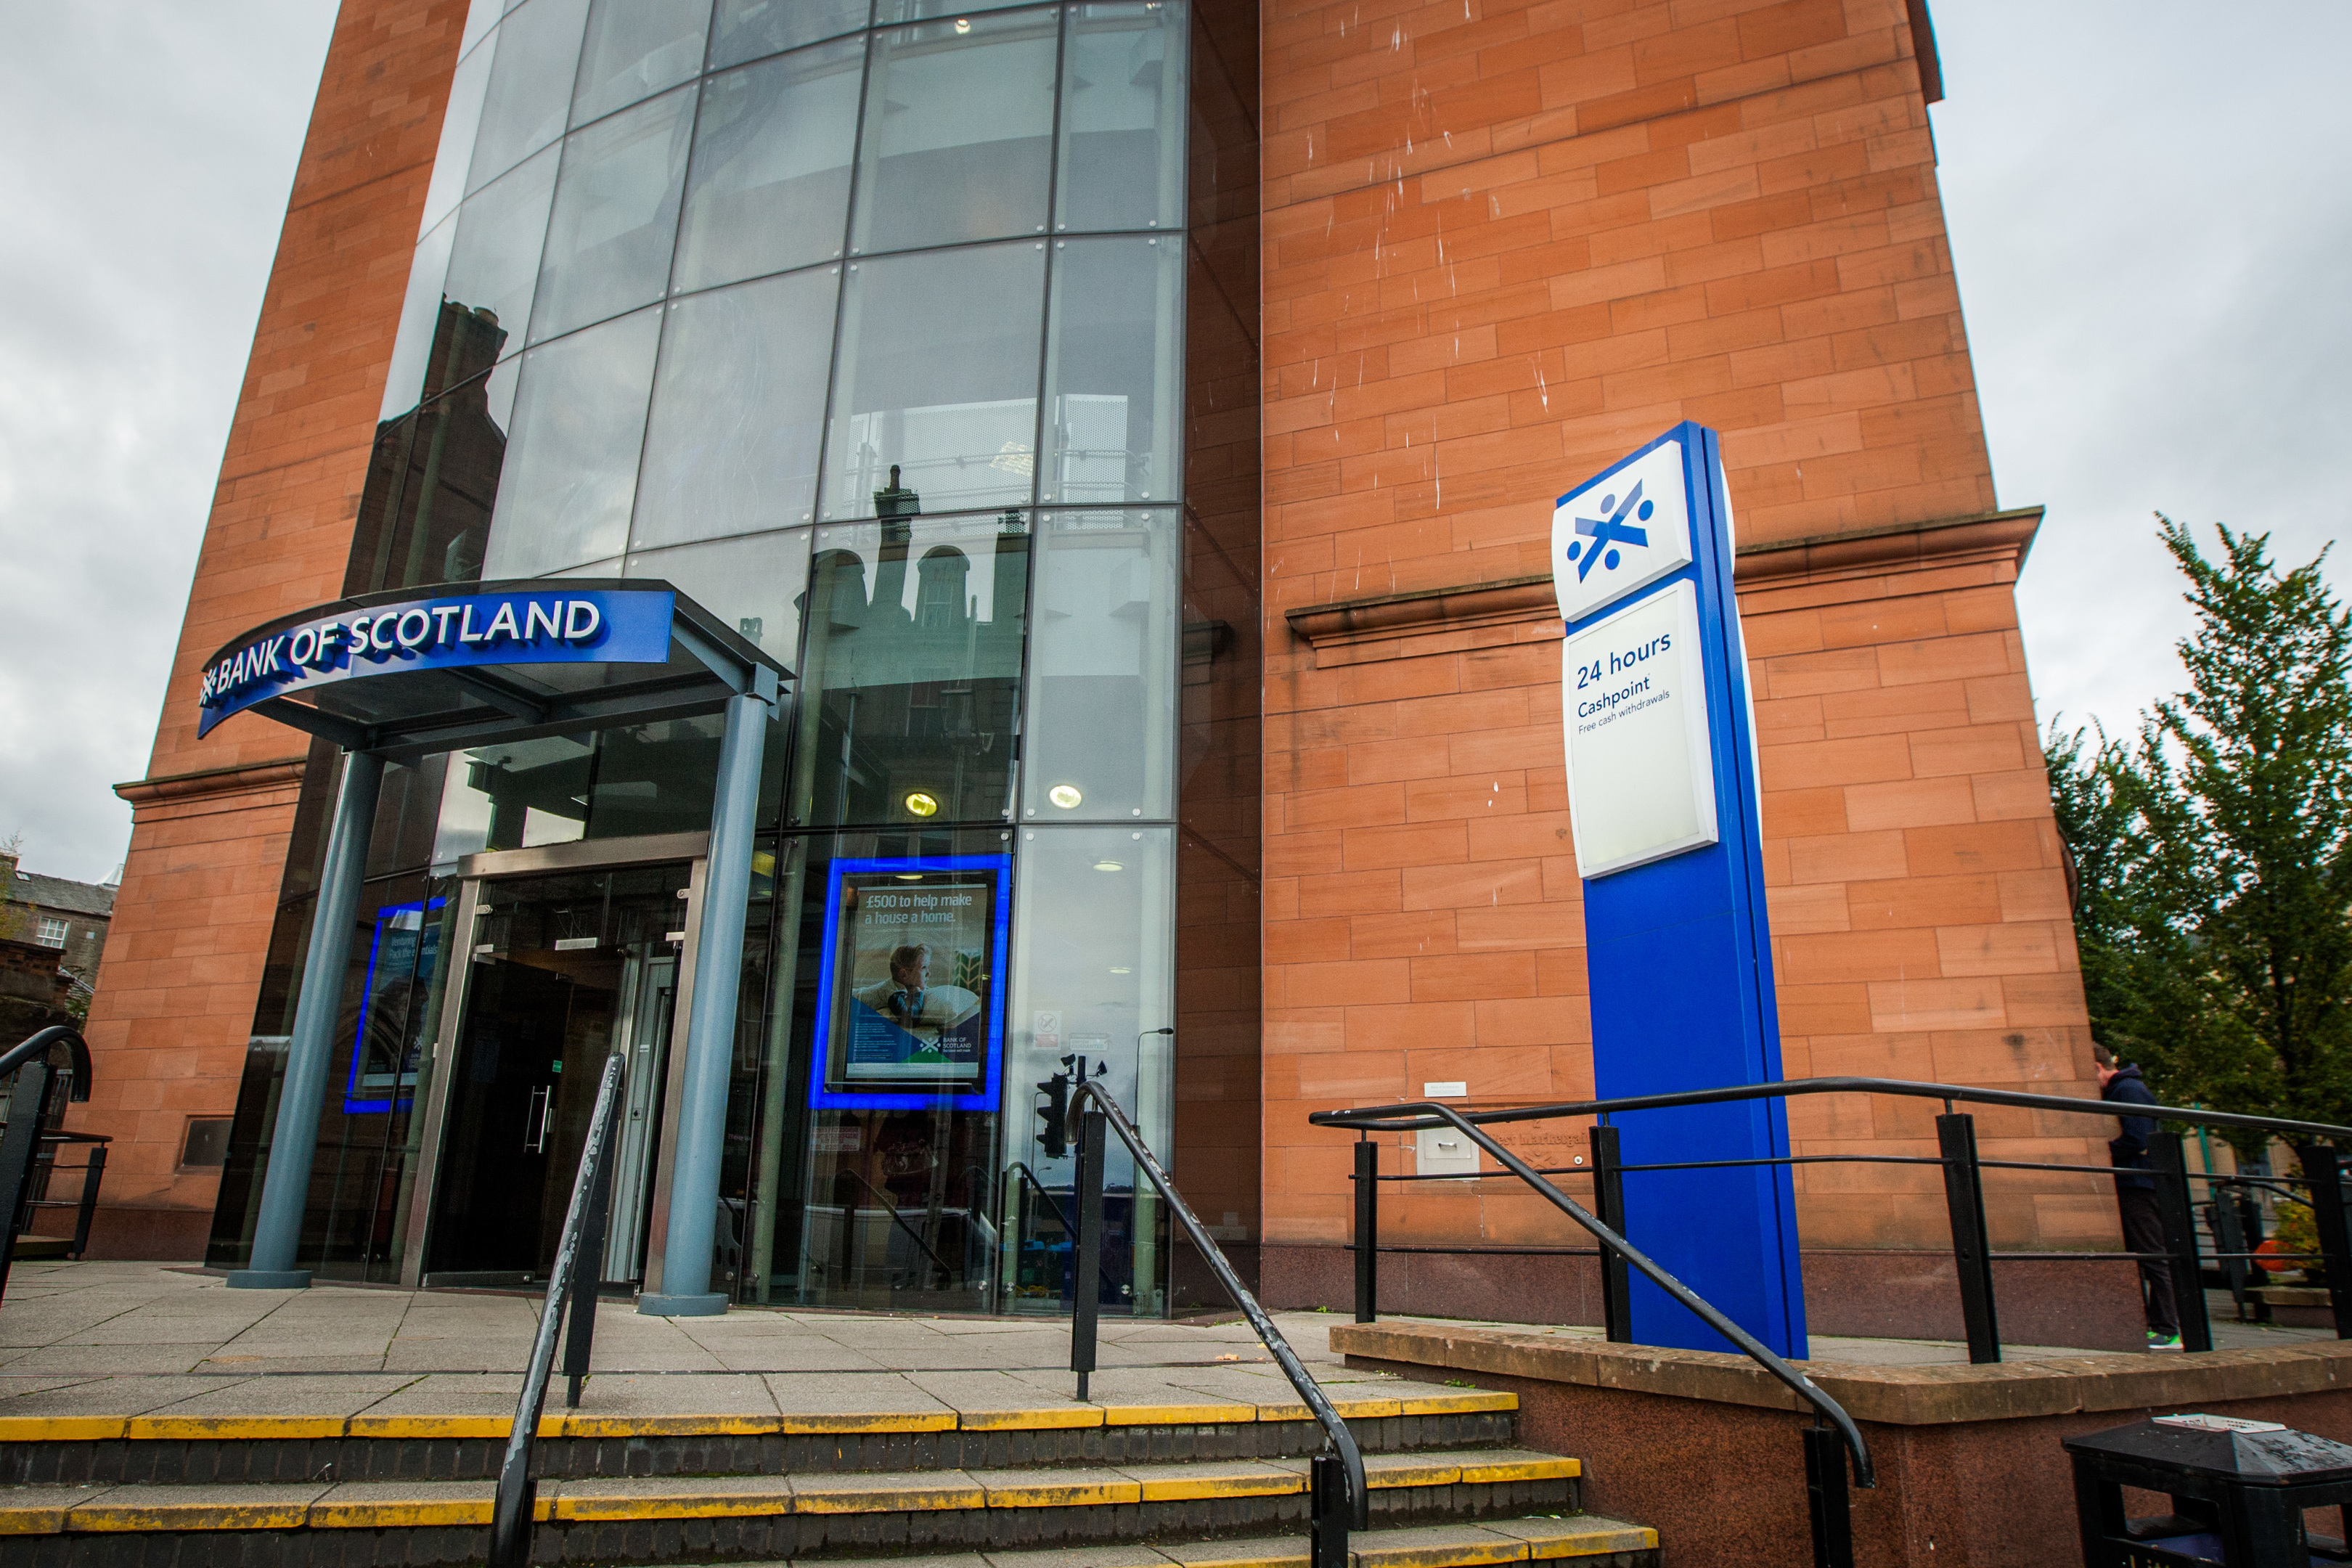 The Bank of Scotland branch in Marketgait.